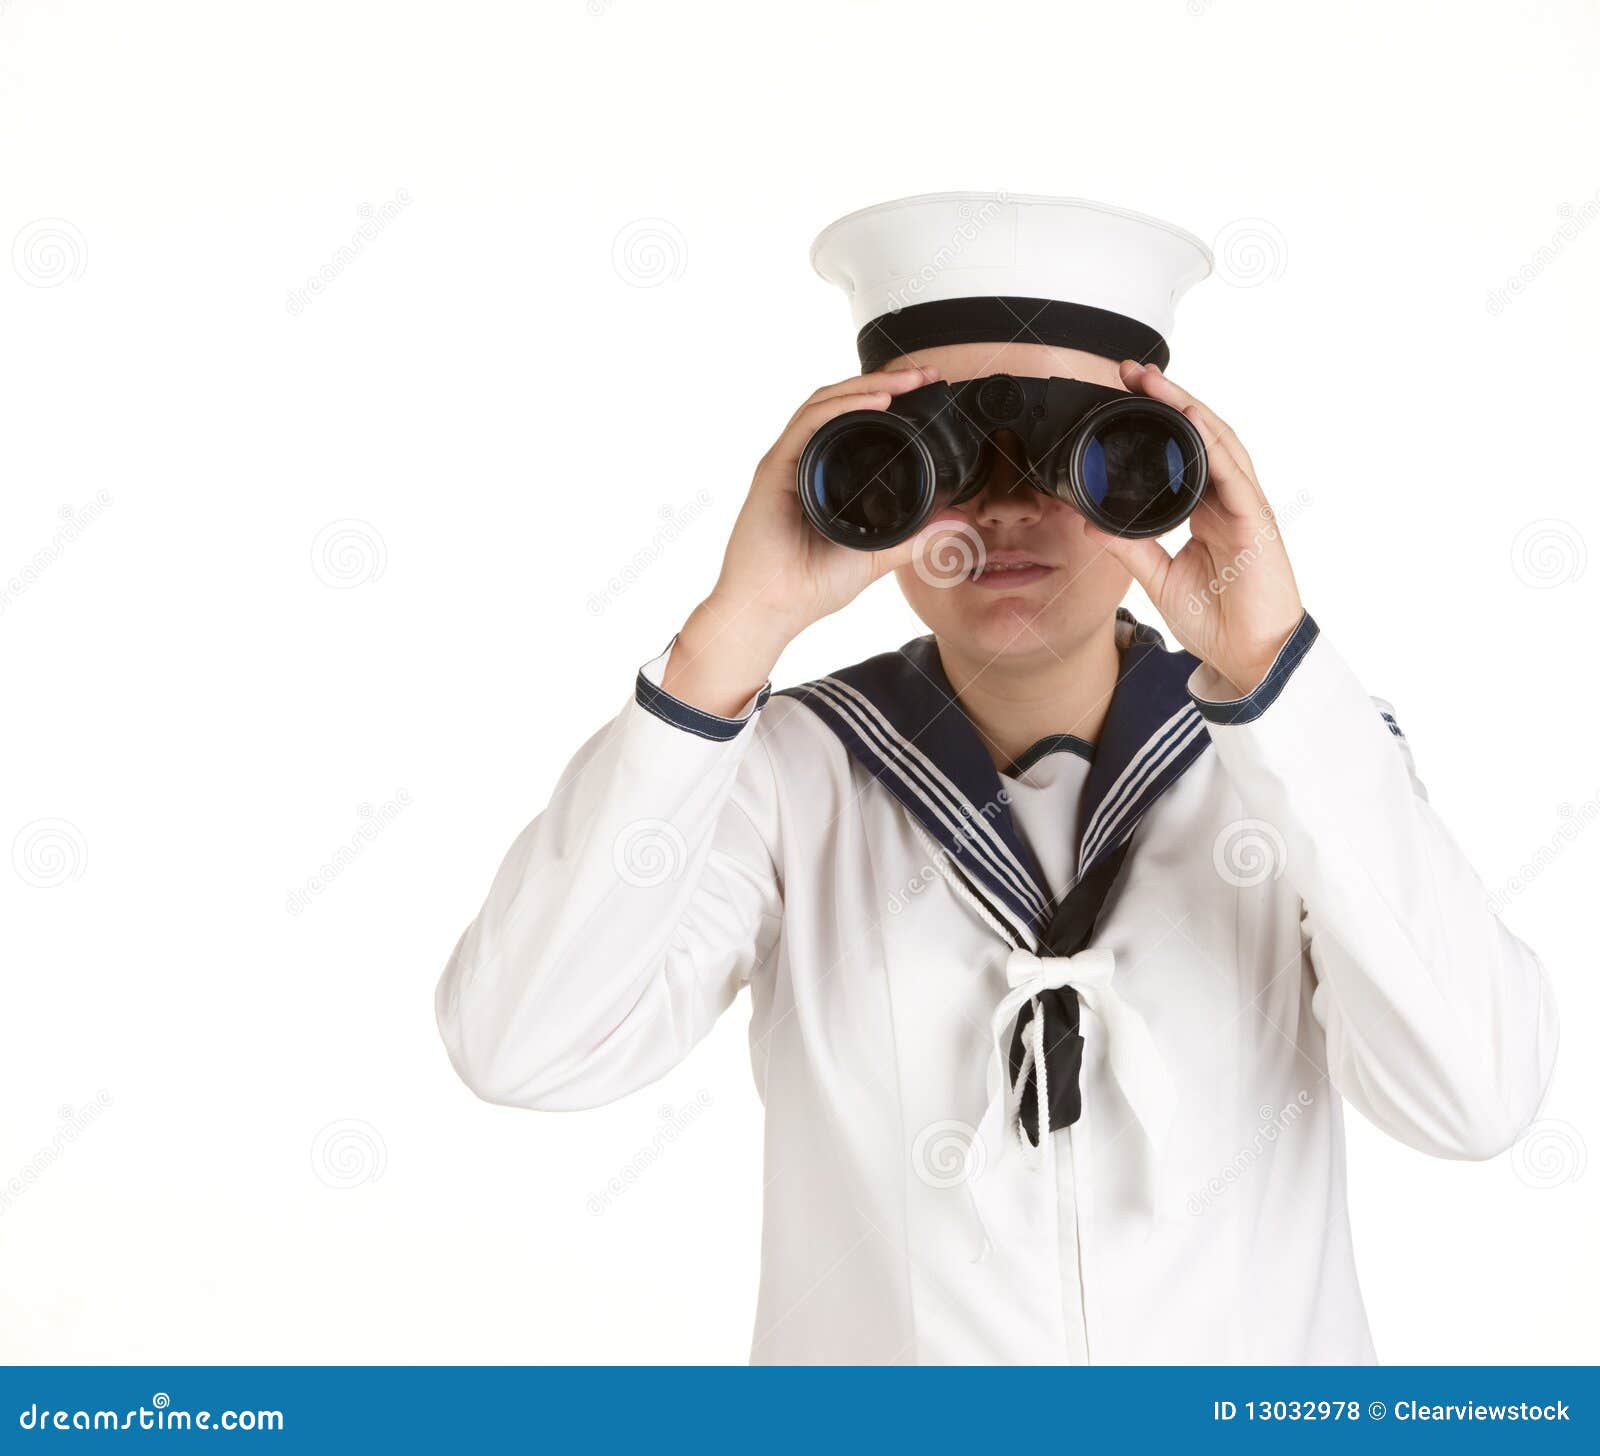 young sailor with binoculars